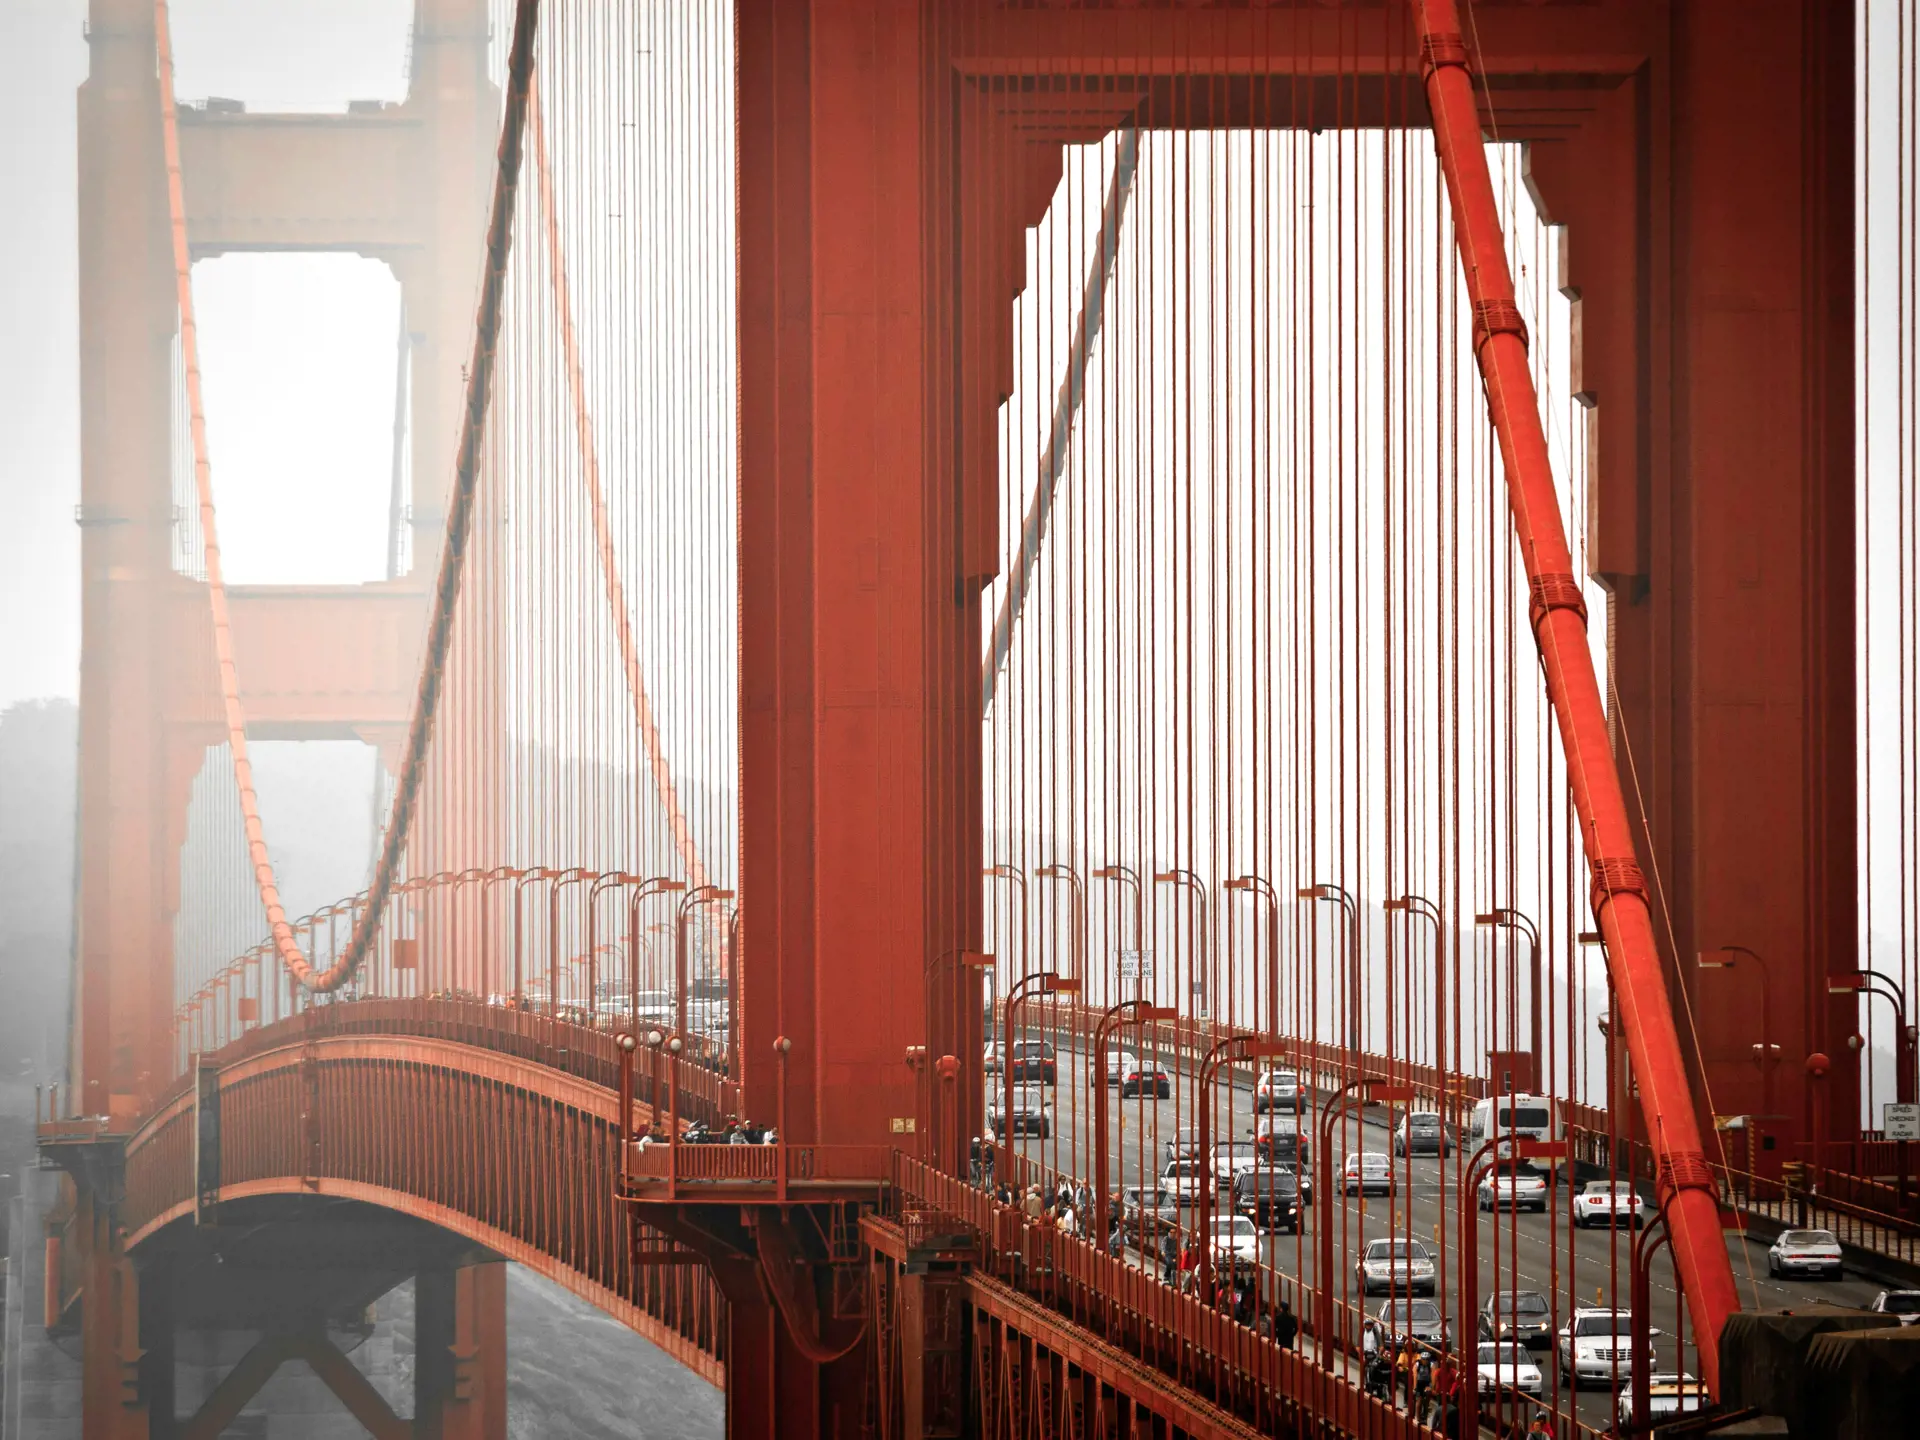 shutterstock_280697003 San Francisco, Golden Gate bridge from above, misty weather.jpg